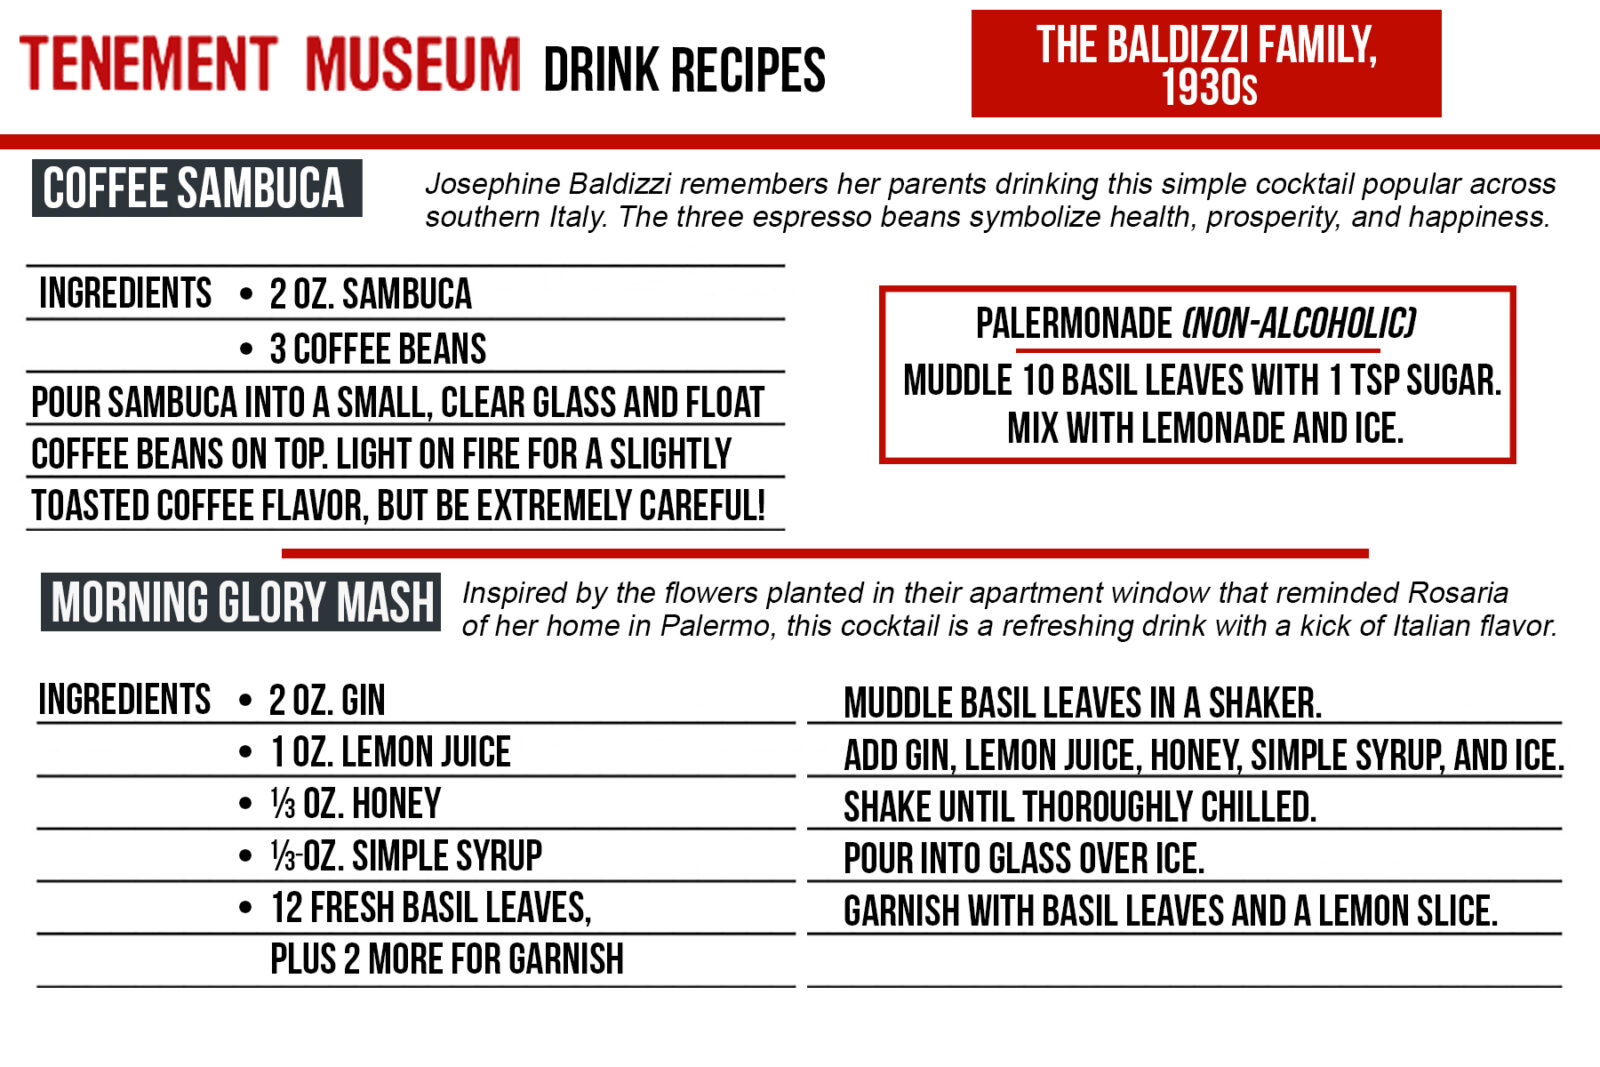 The Baldizzi Family, Drink Recipe, Tenement Museum Drink Recipes